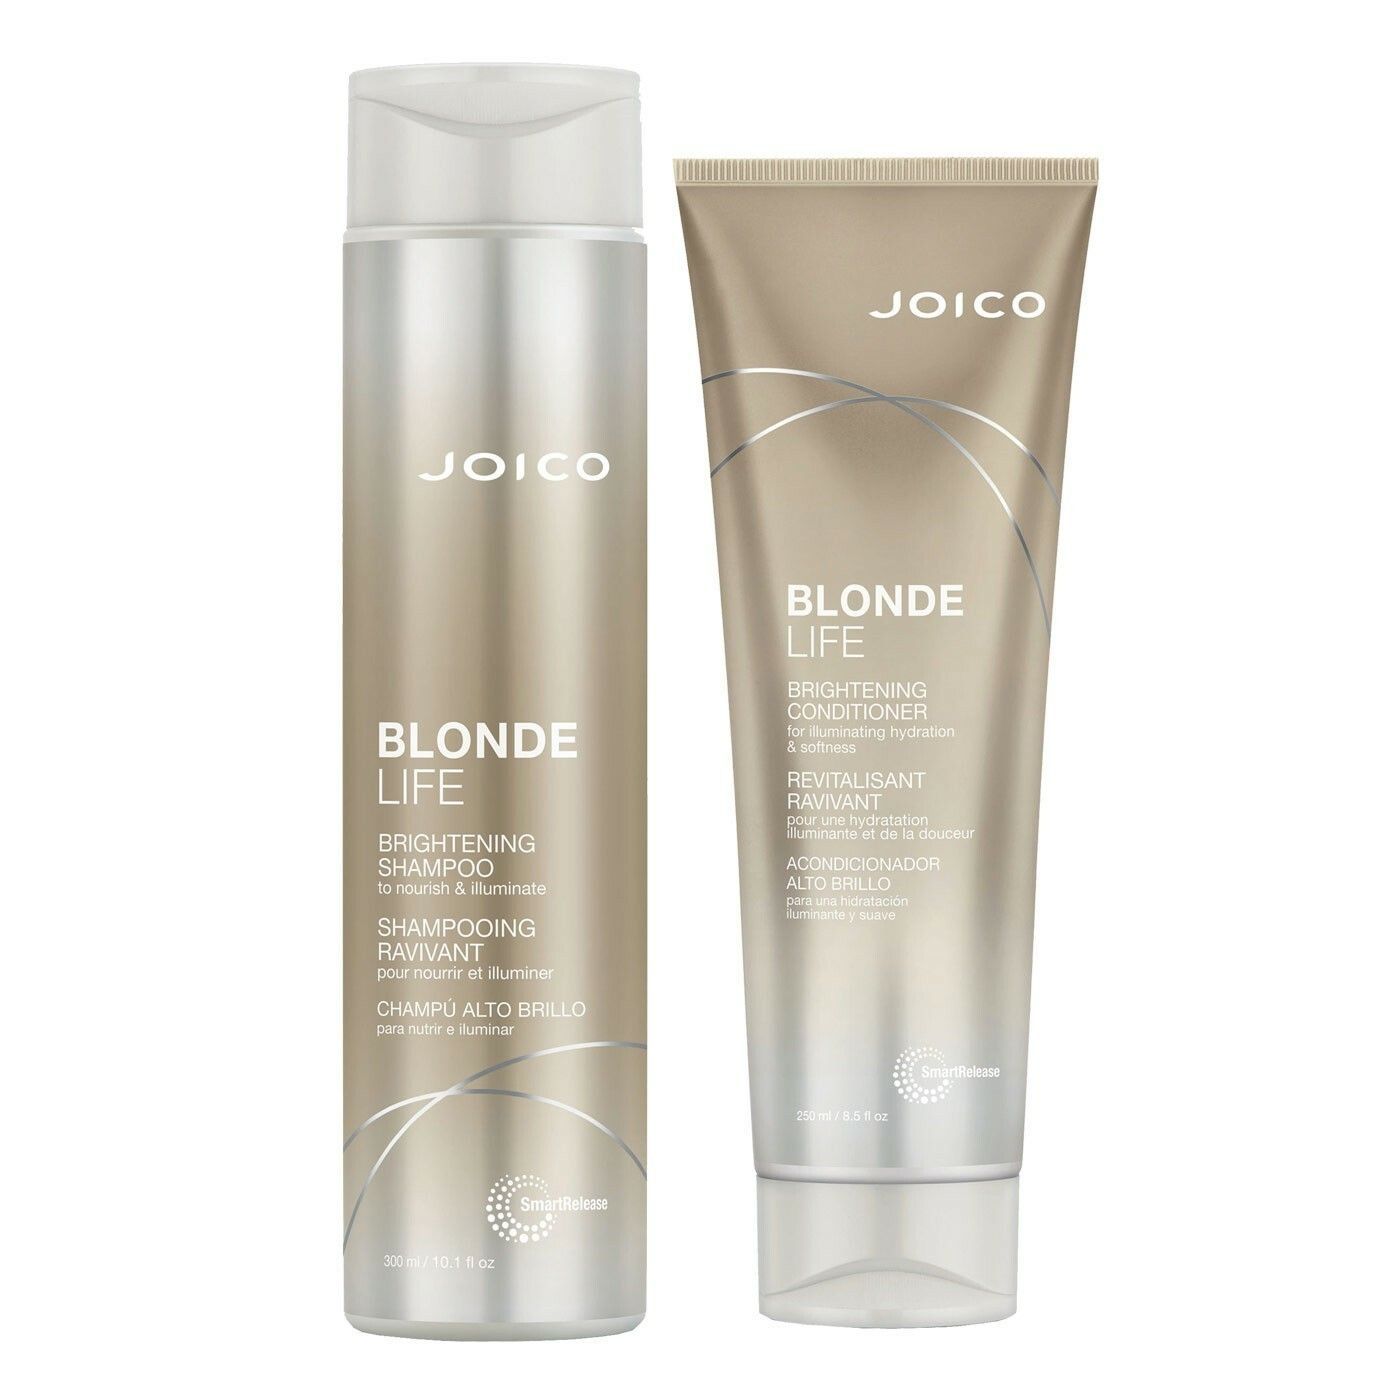 Joico Blonde Life Brightening Shampoo & Conditioner - 300-250ml